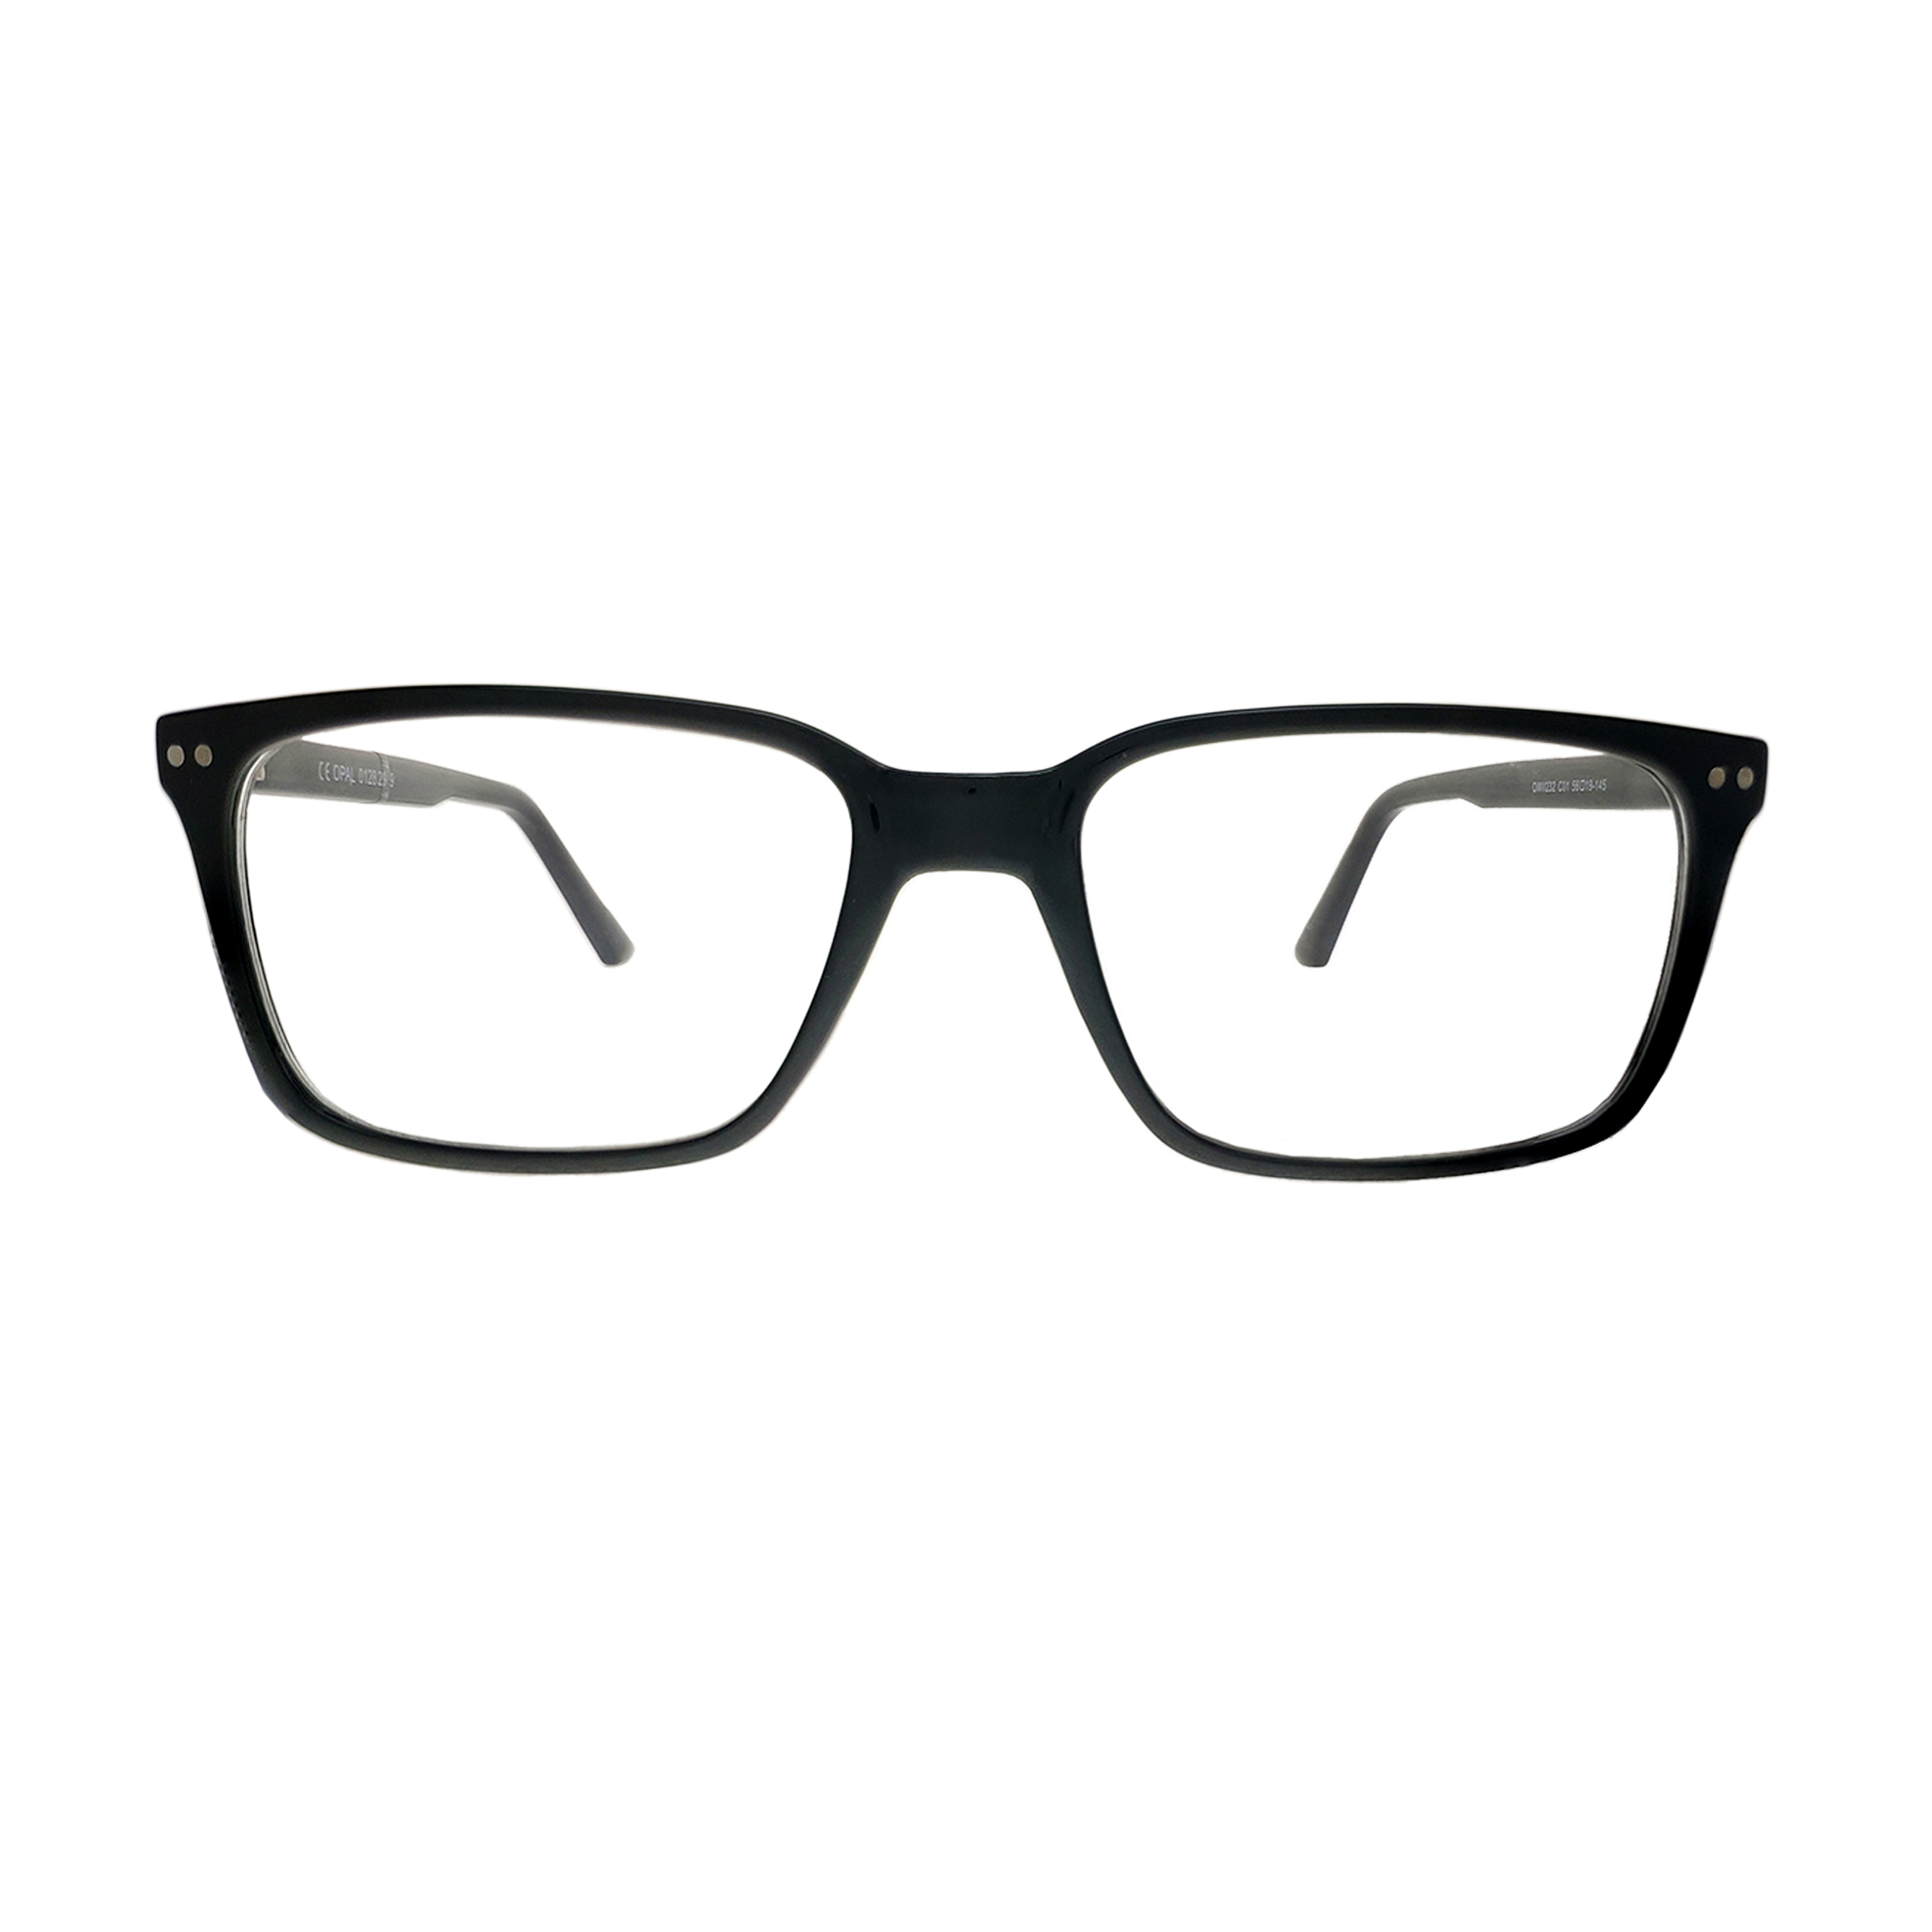 فریم عینک طبی اوپال مدل 1485-1507 - OWII232C01 - 56.19.145